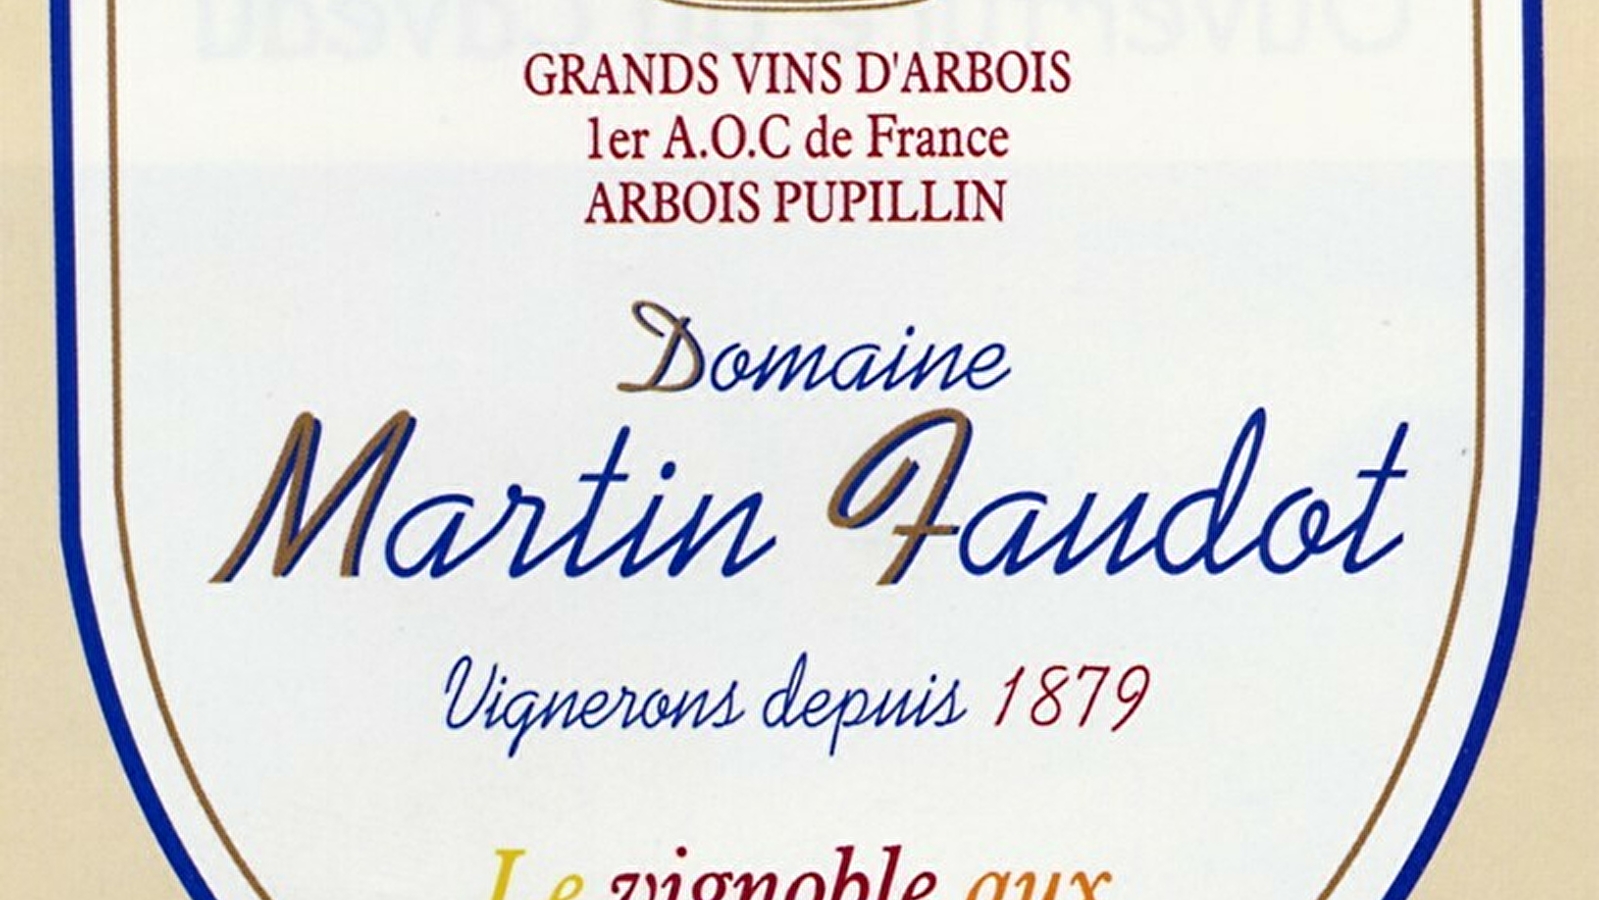 Domaine Martin Faudot & Fils 